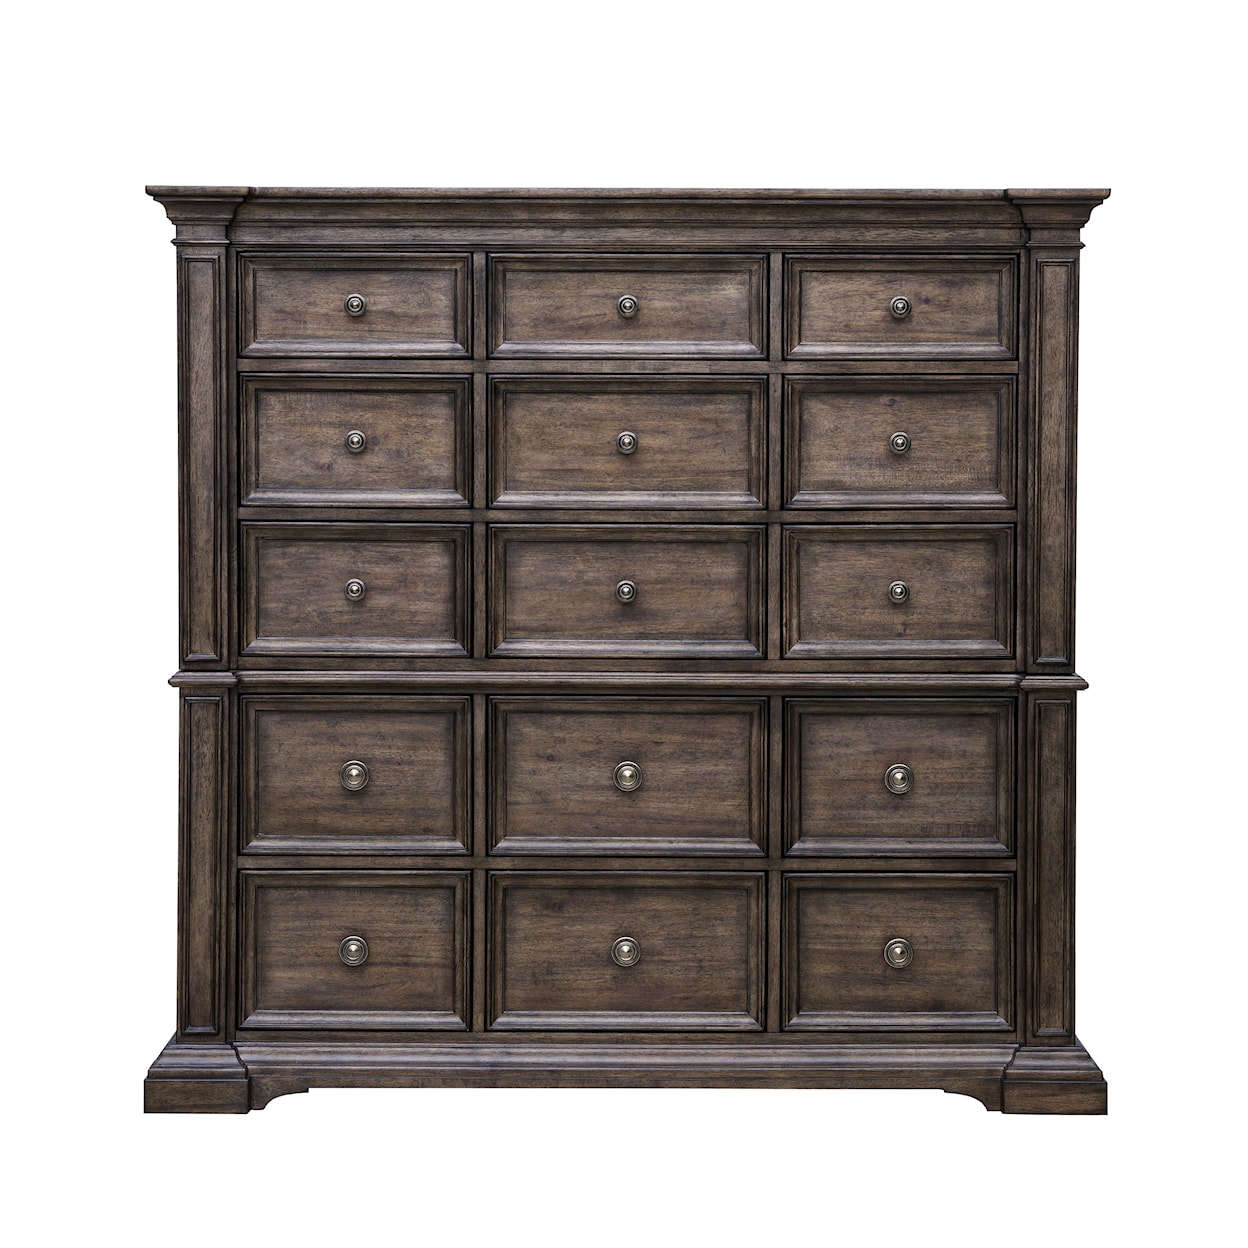 Pulaski Furniture Woodbury 15-Drawer Bedroom Chest